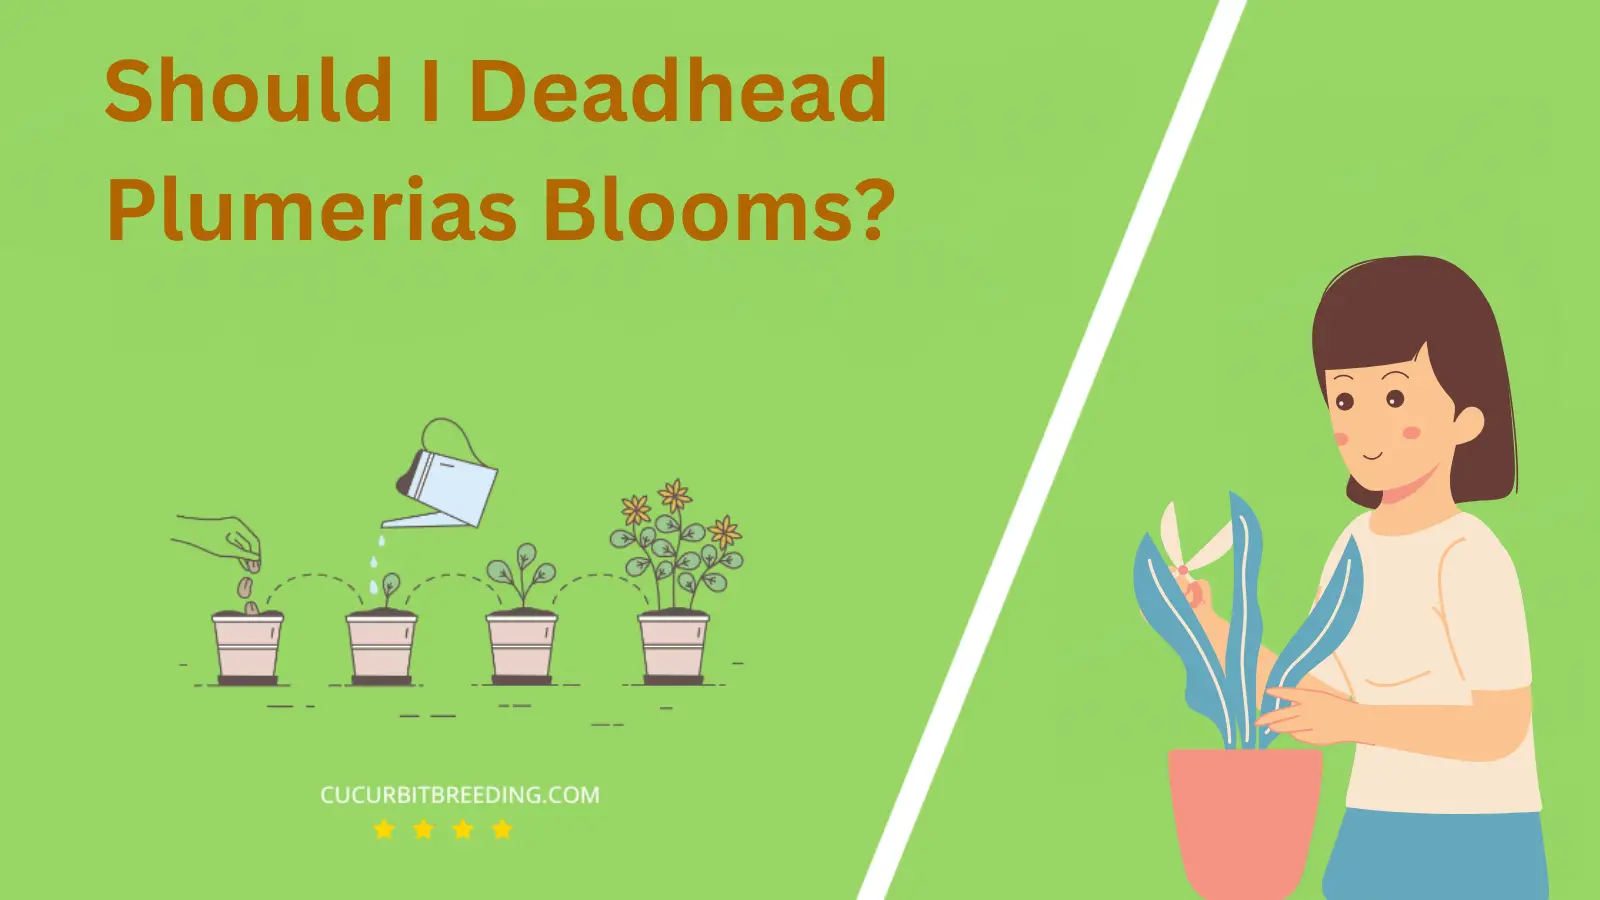 Should I Deadhead Plumerias Blooms?